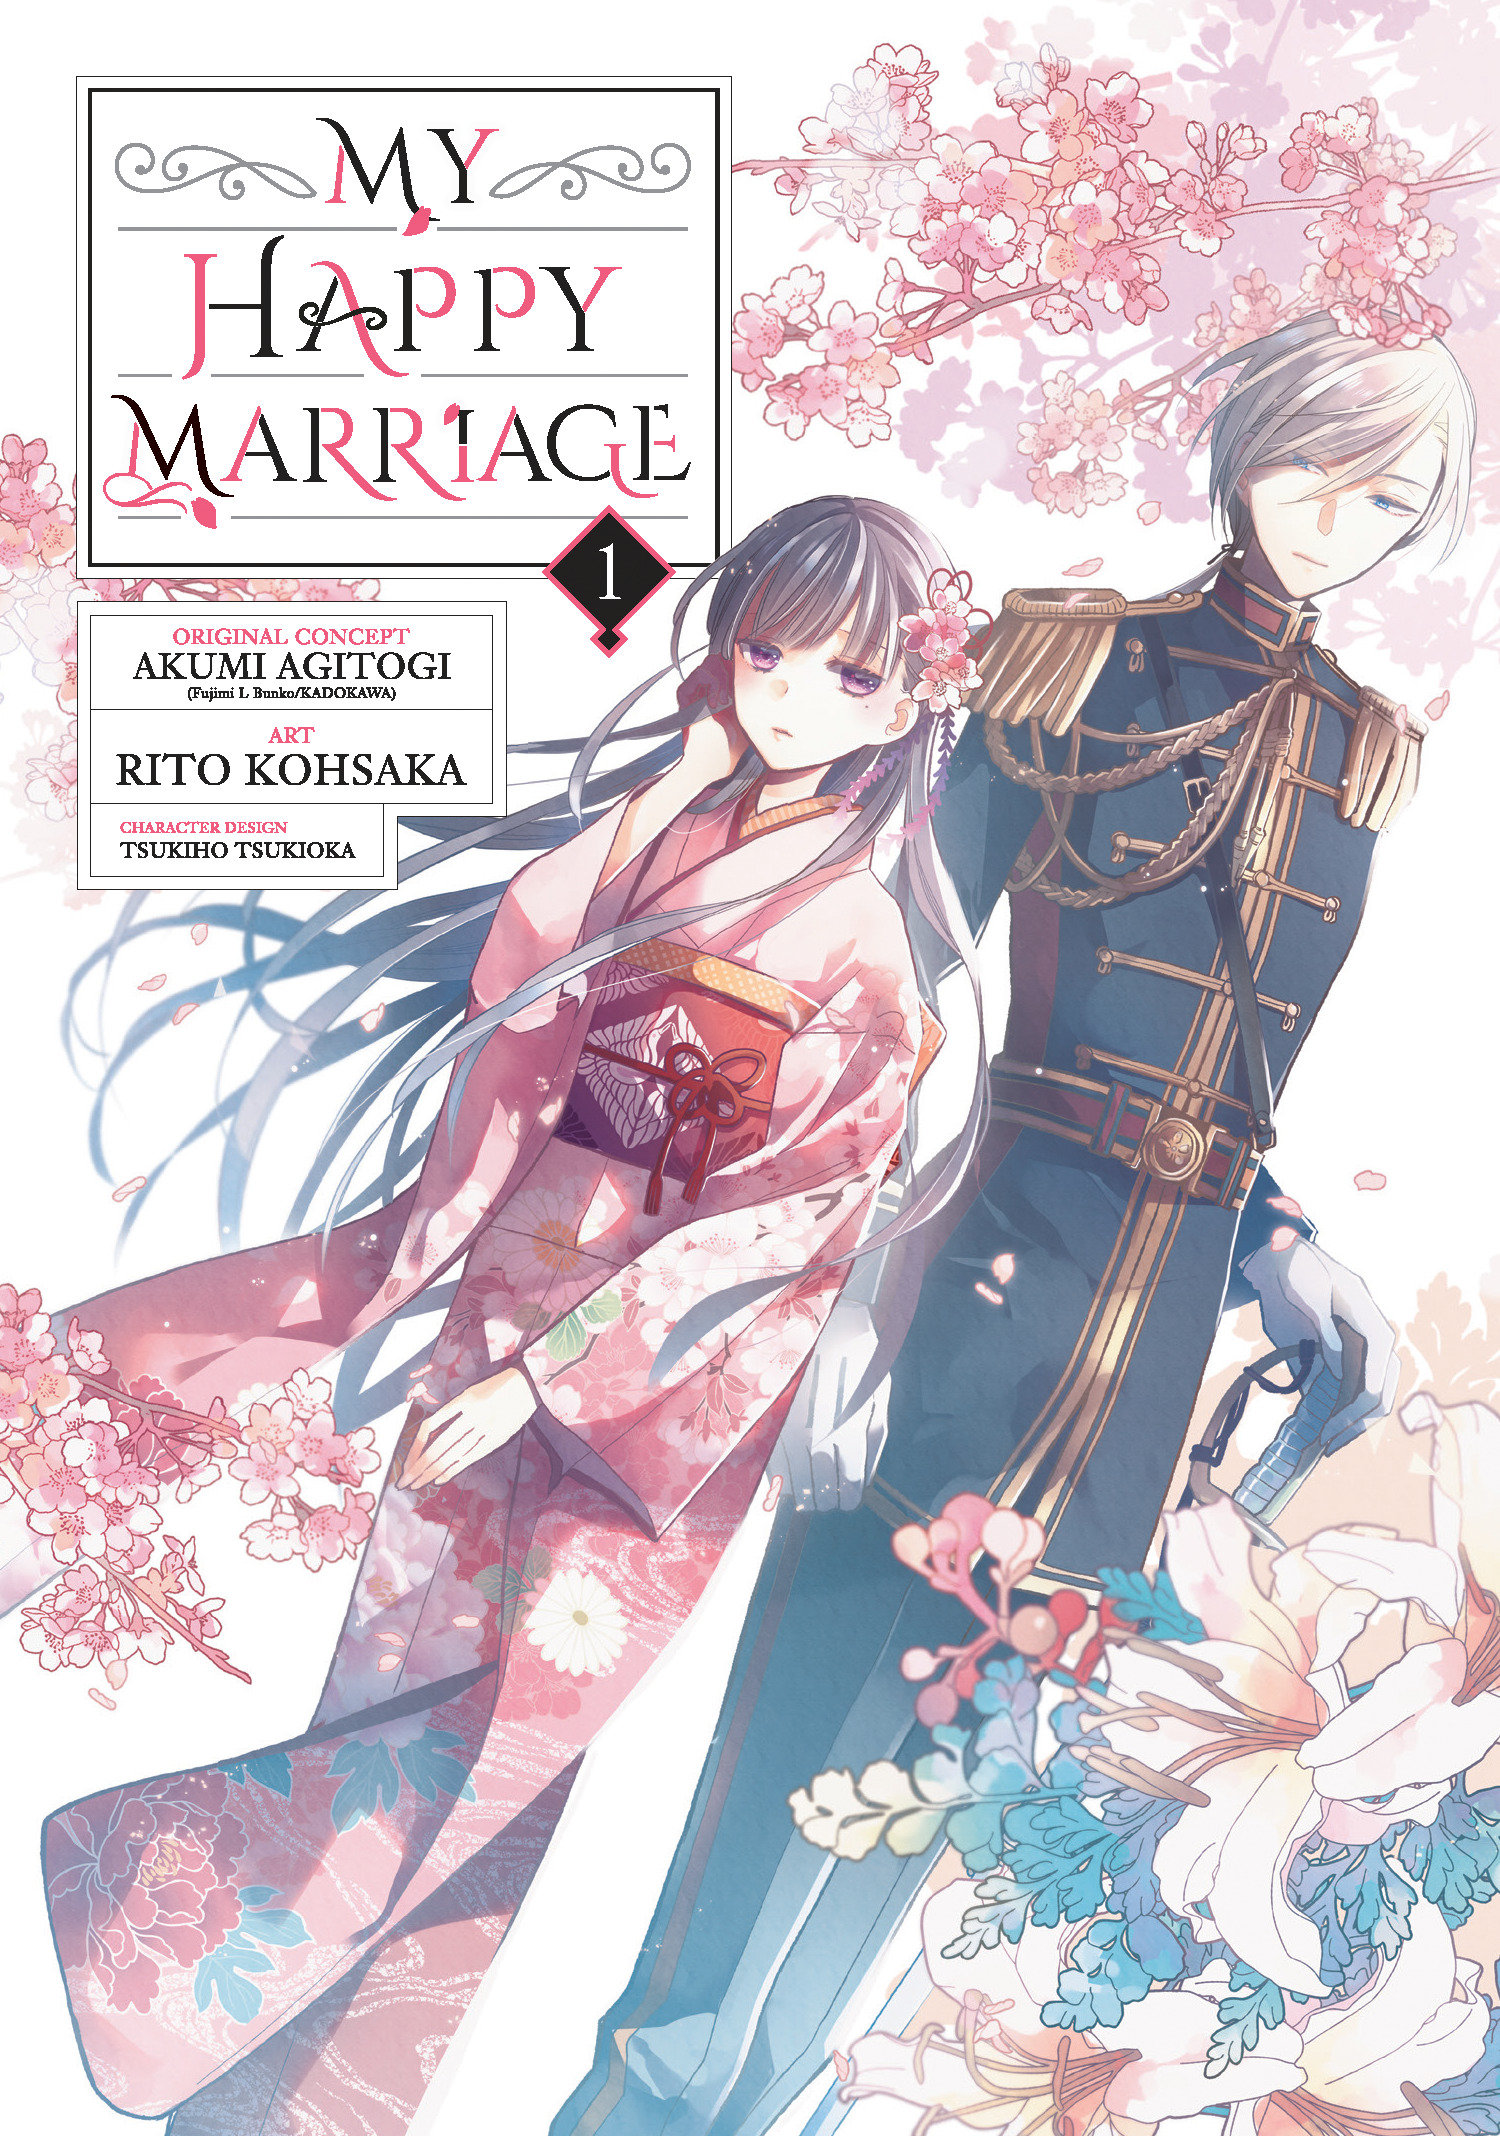 My Happy Marriage Manga Volume 1